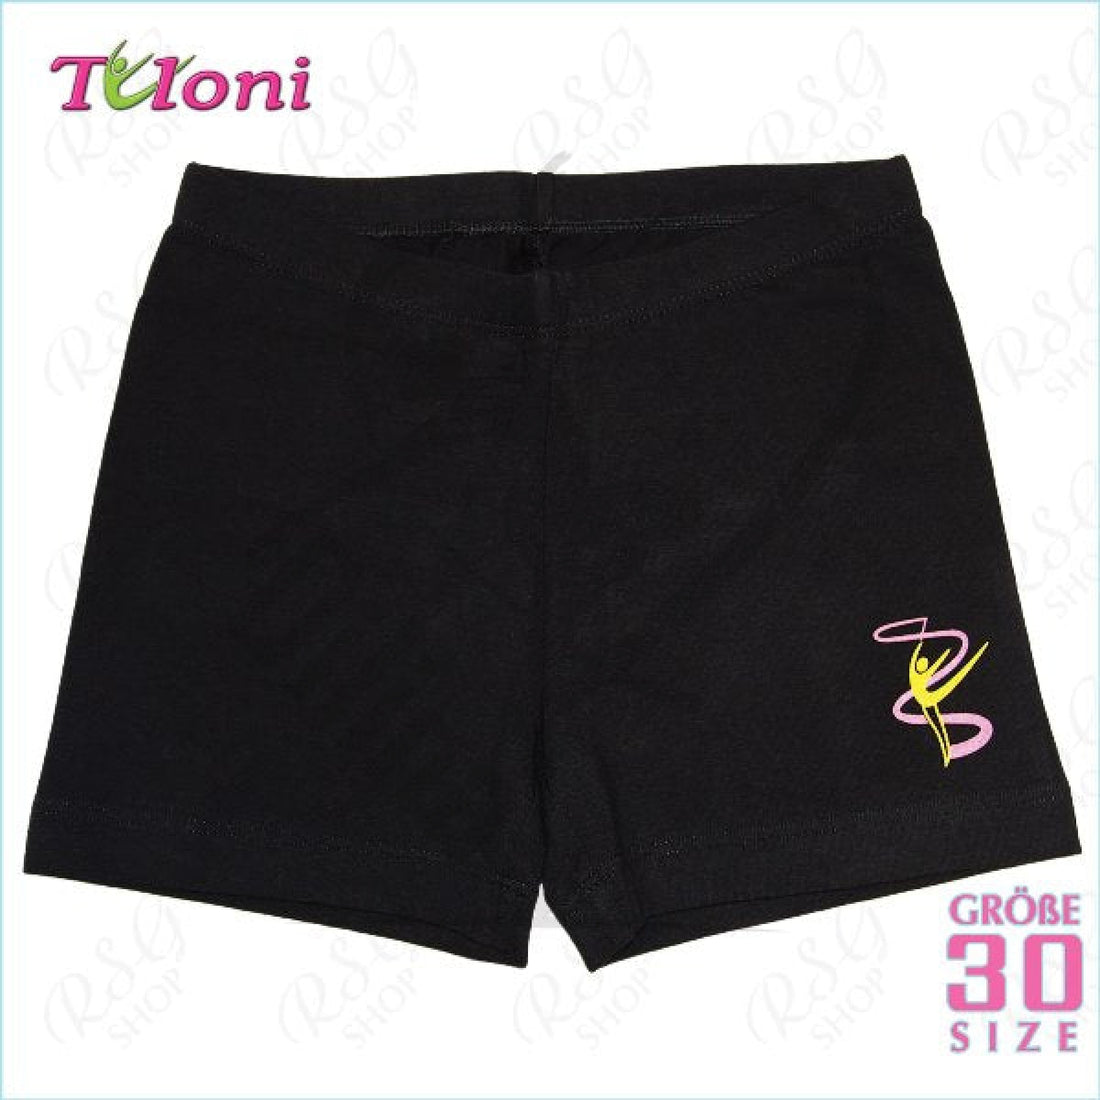 Tuloni Shorts Black With Gymnasts Emblem 30 (110-116)